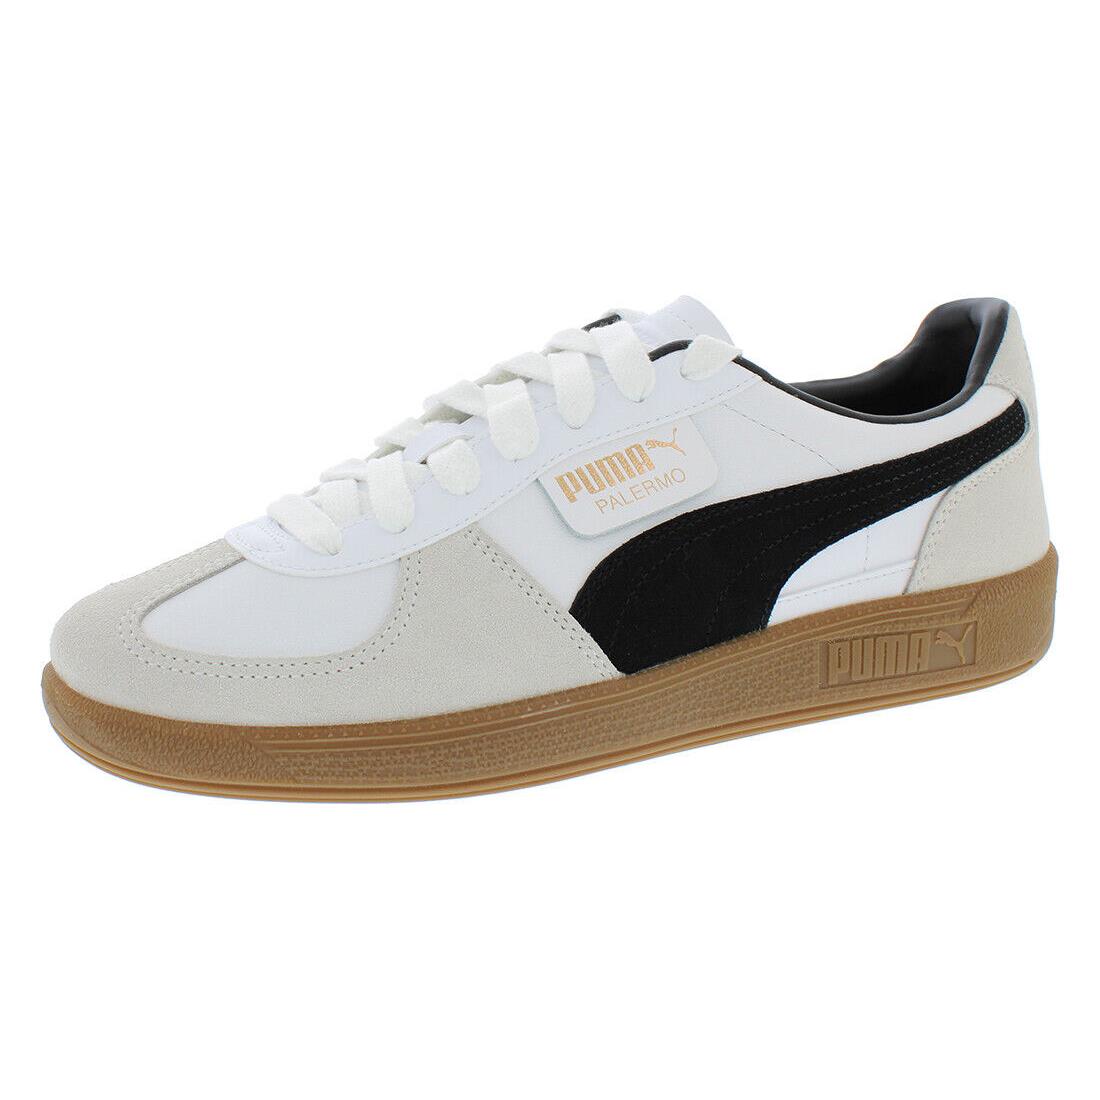 Puma Palermo Leather Mens Shoes - White/Vapor Grey/Gum, Main: White